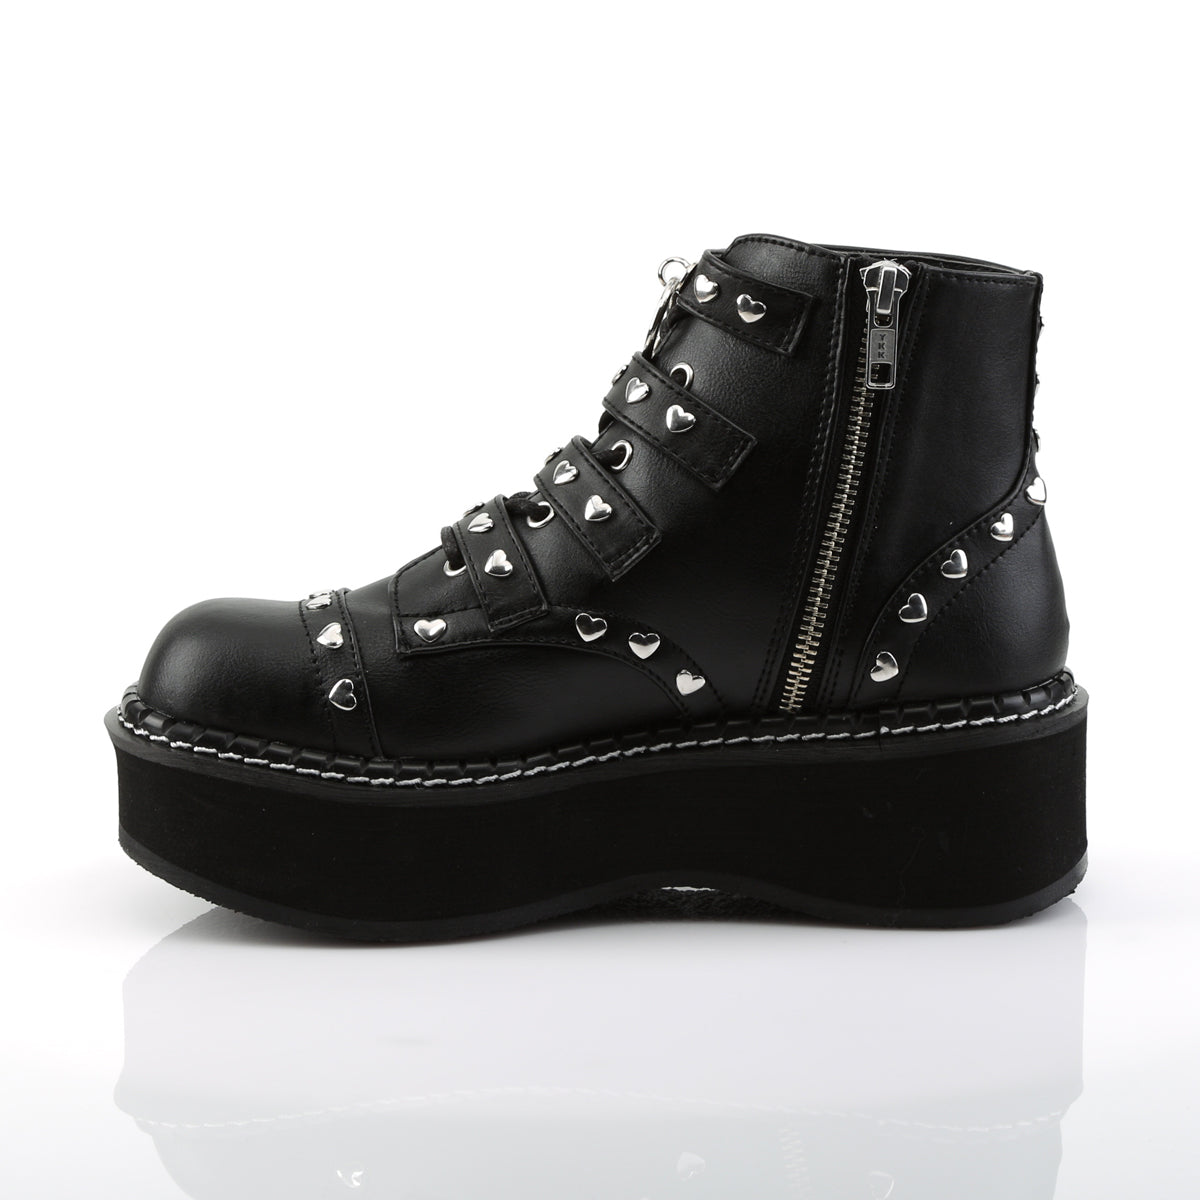 EMILY-315 Demonia Black Vegan Leather Women's Ankle Boots [Demonia Cult Alternative Footwear]